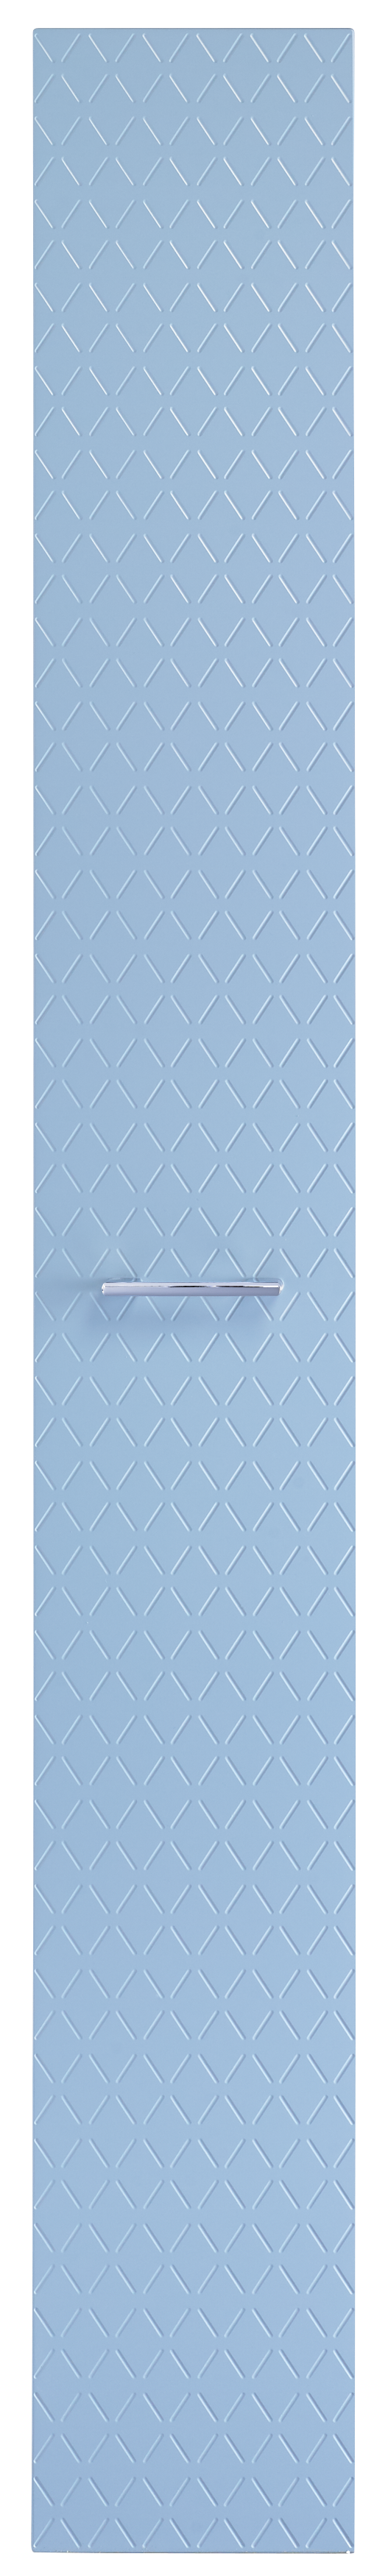 Puerta mueble baño azul22.2x172.5cm 1 ud